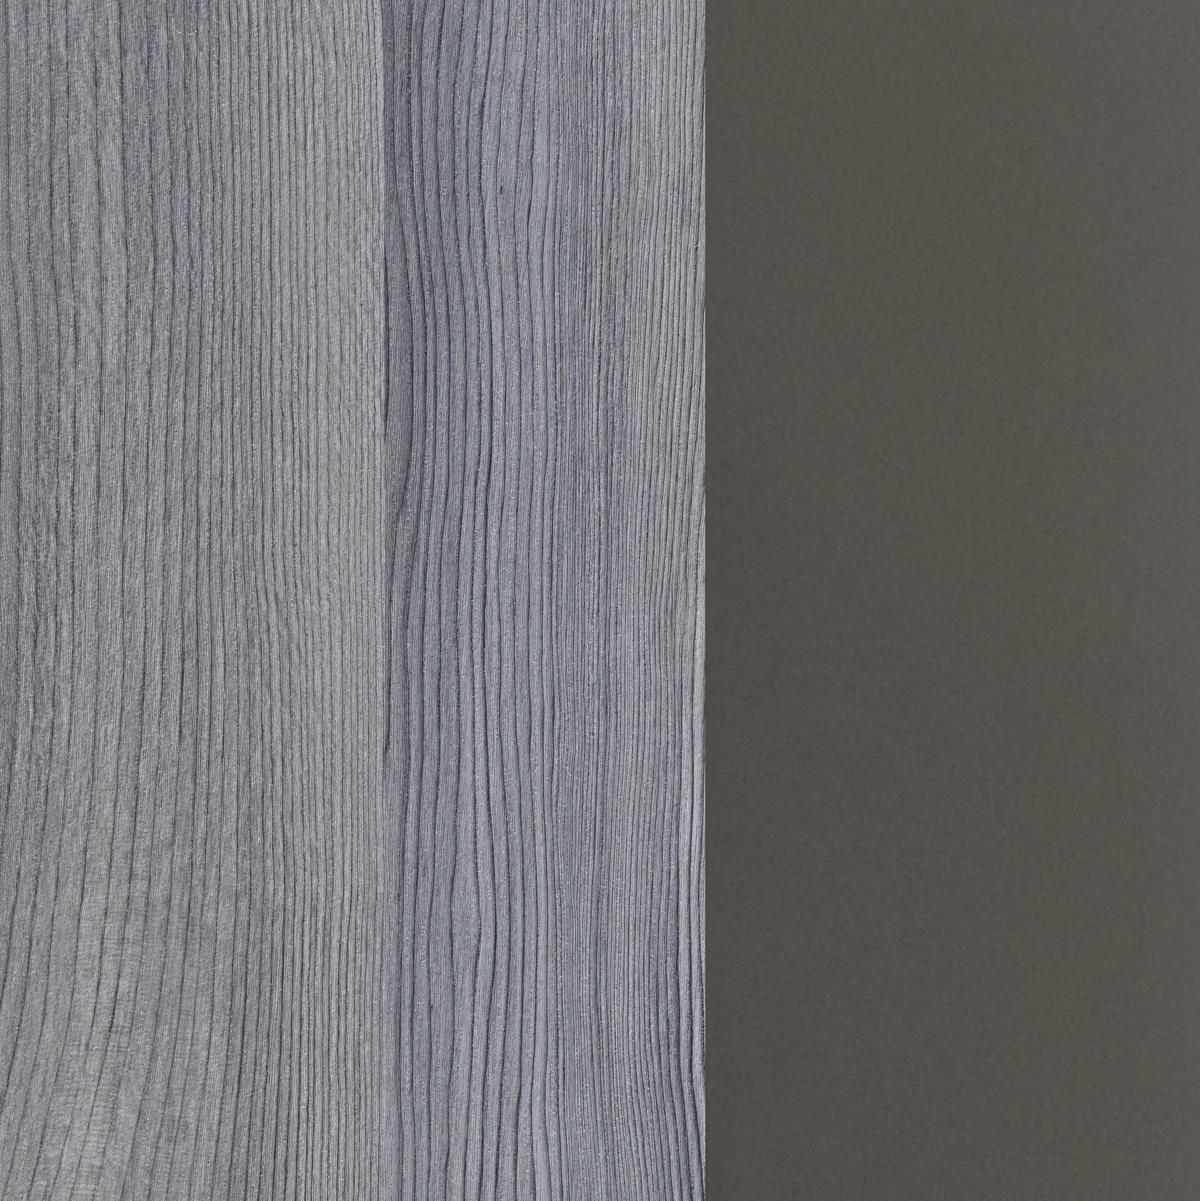 HOCHSCHRANK 40/180/35 cm  - Silberfarben/Alufarben, Basics, Holzwerkstoff/Kunststoff (40/180/35cm) - Held